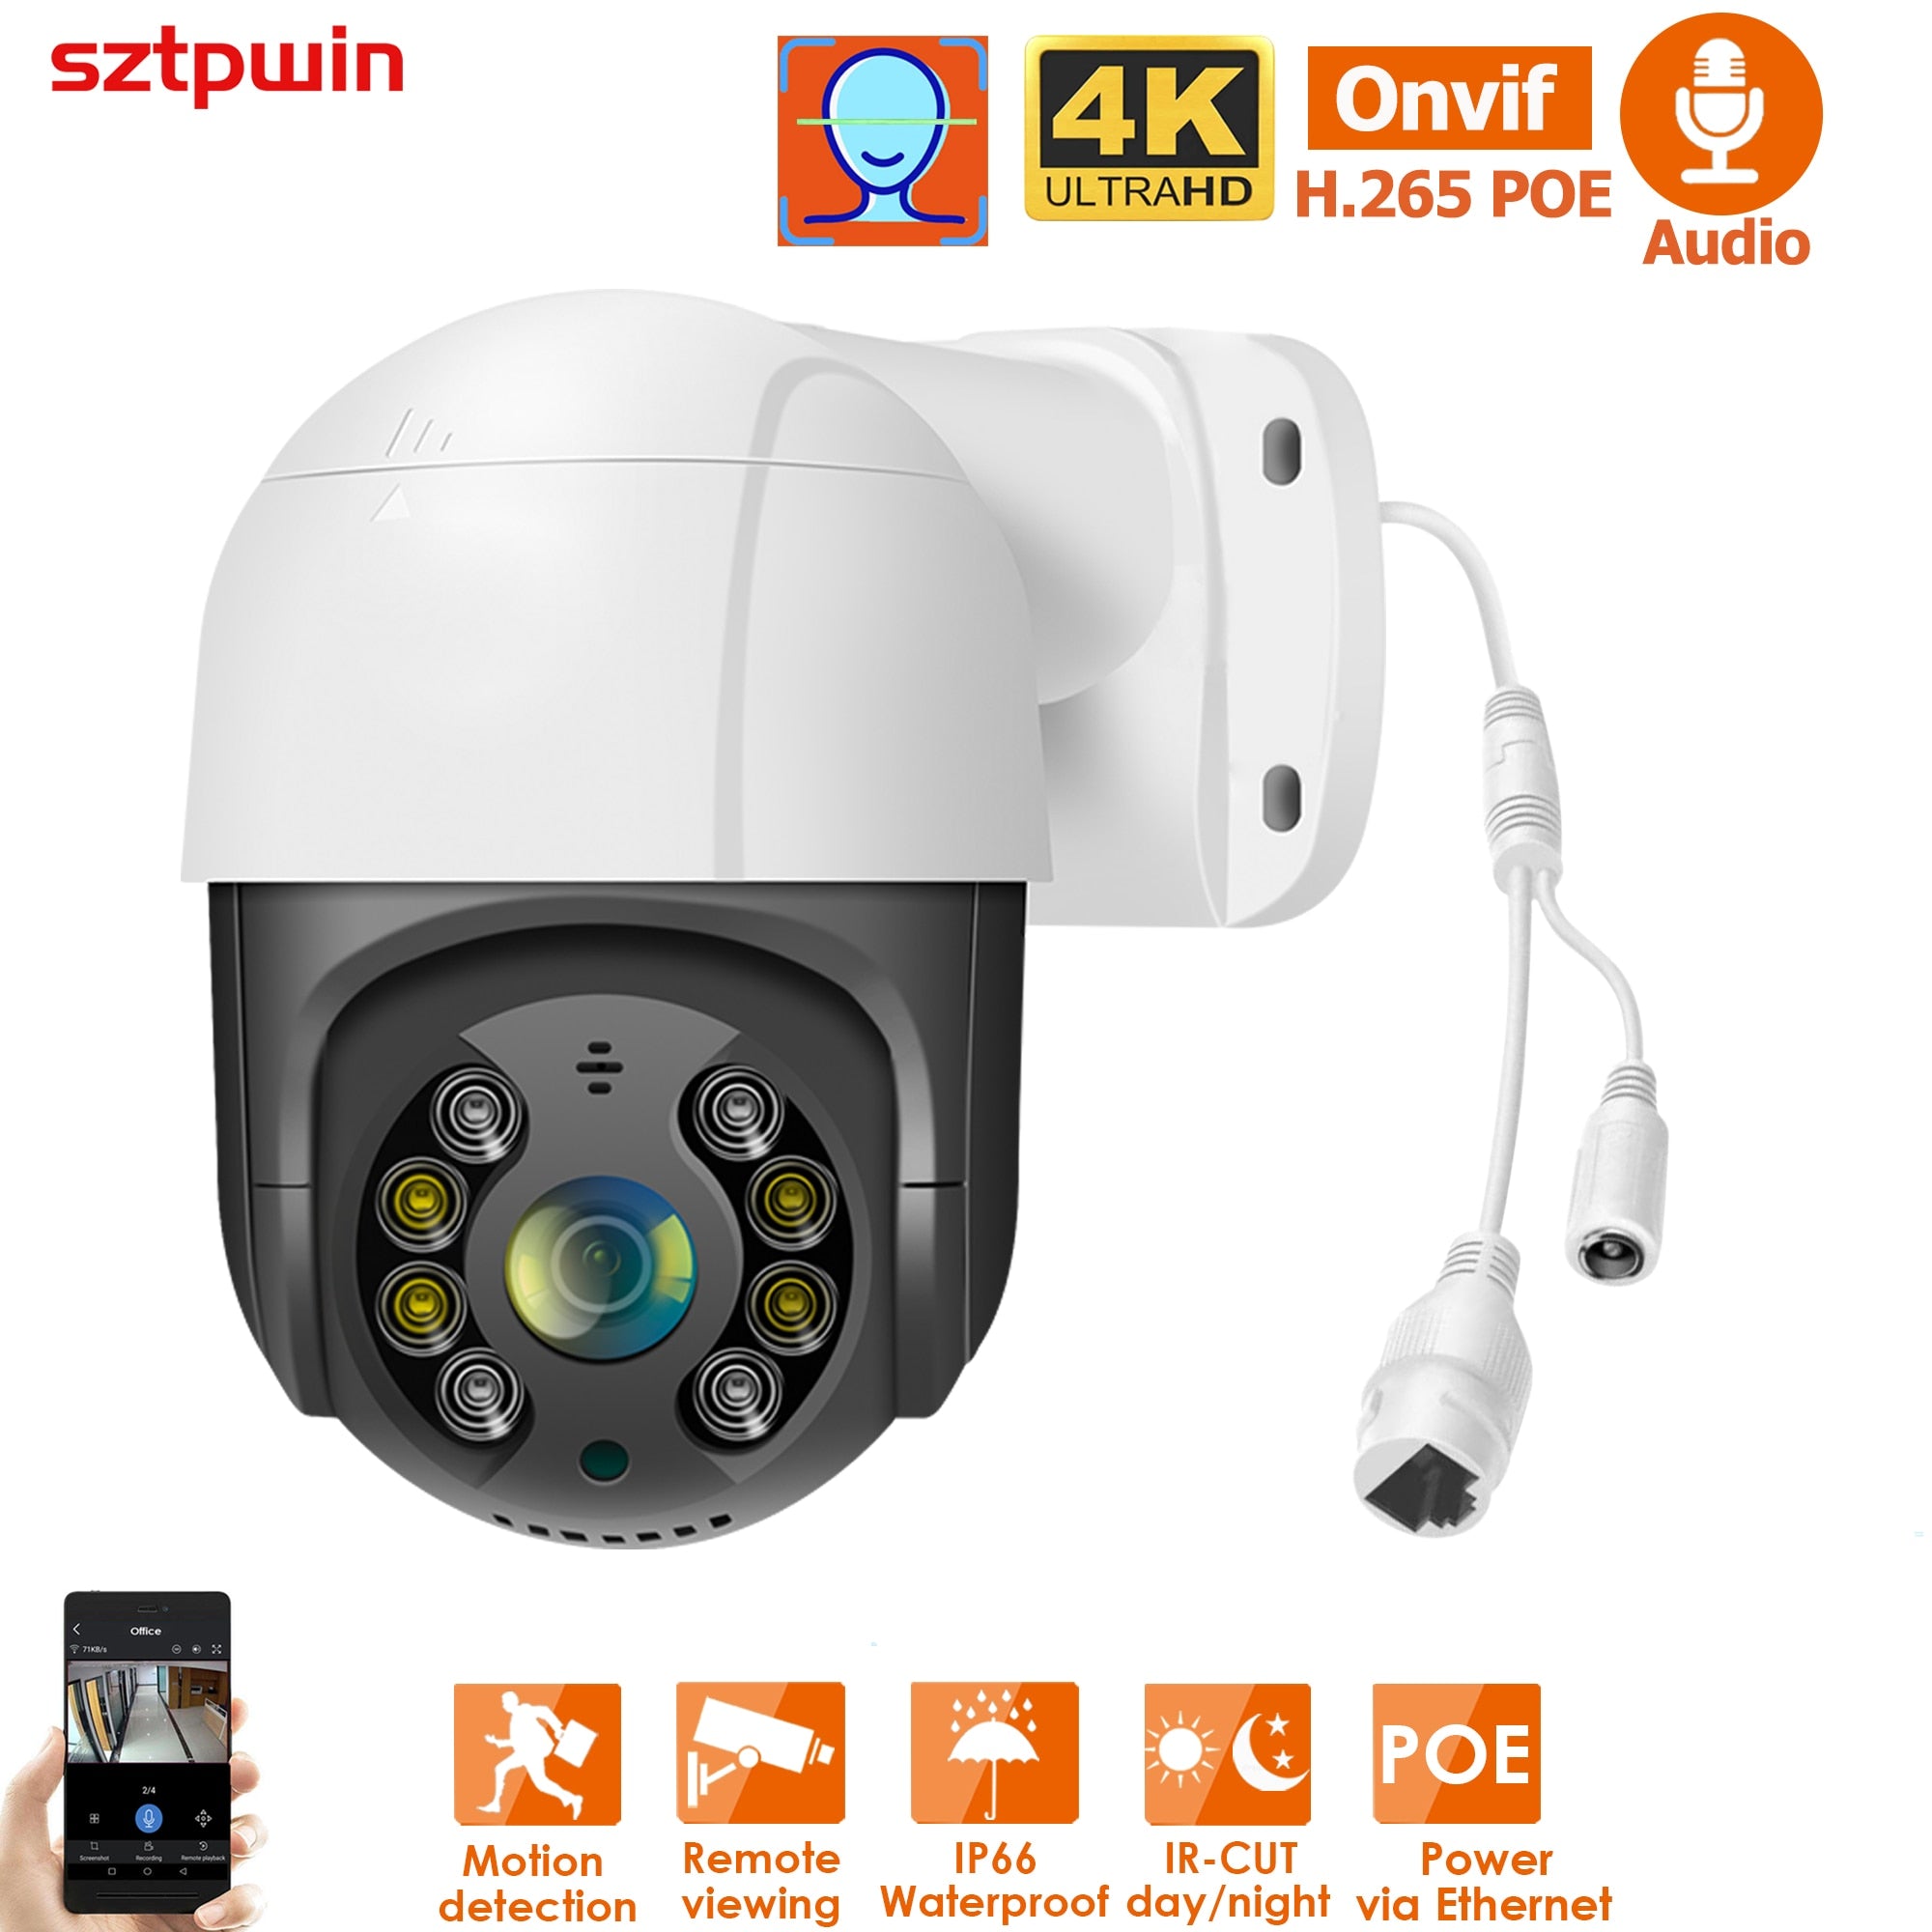 4K 8MP 2.5'' POE PTZ Video IP CCTV Surveillance Security NetworkCamera System Kit FaceDetection 4XDigital ZOOM OutdoorWaterproof